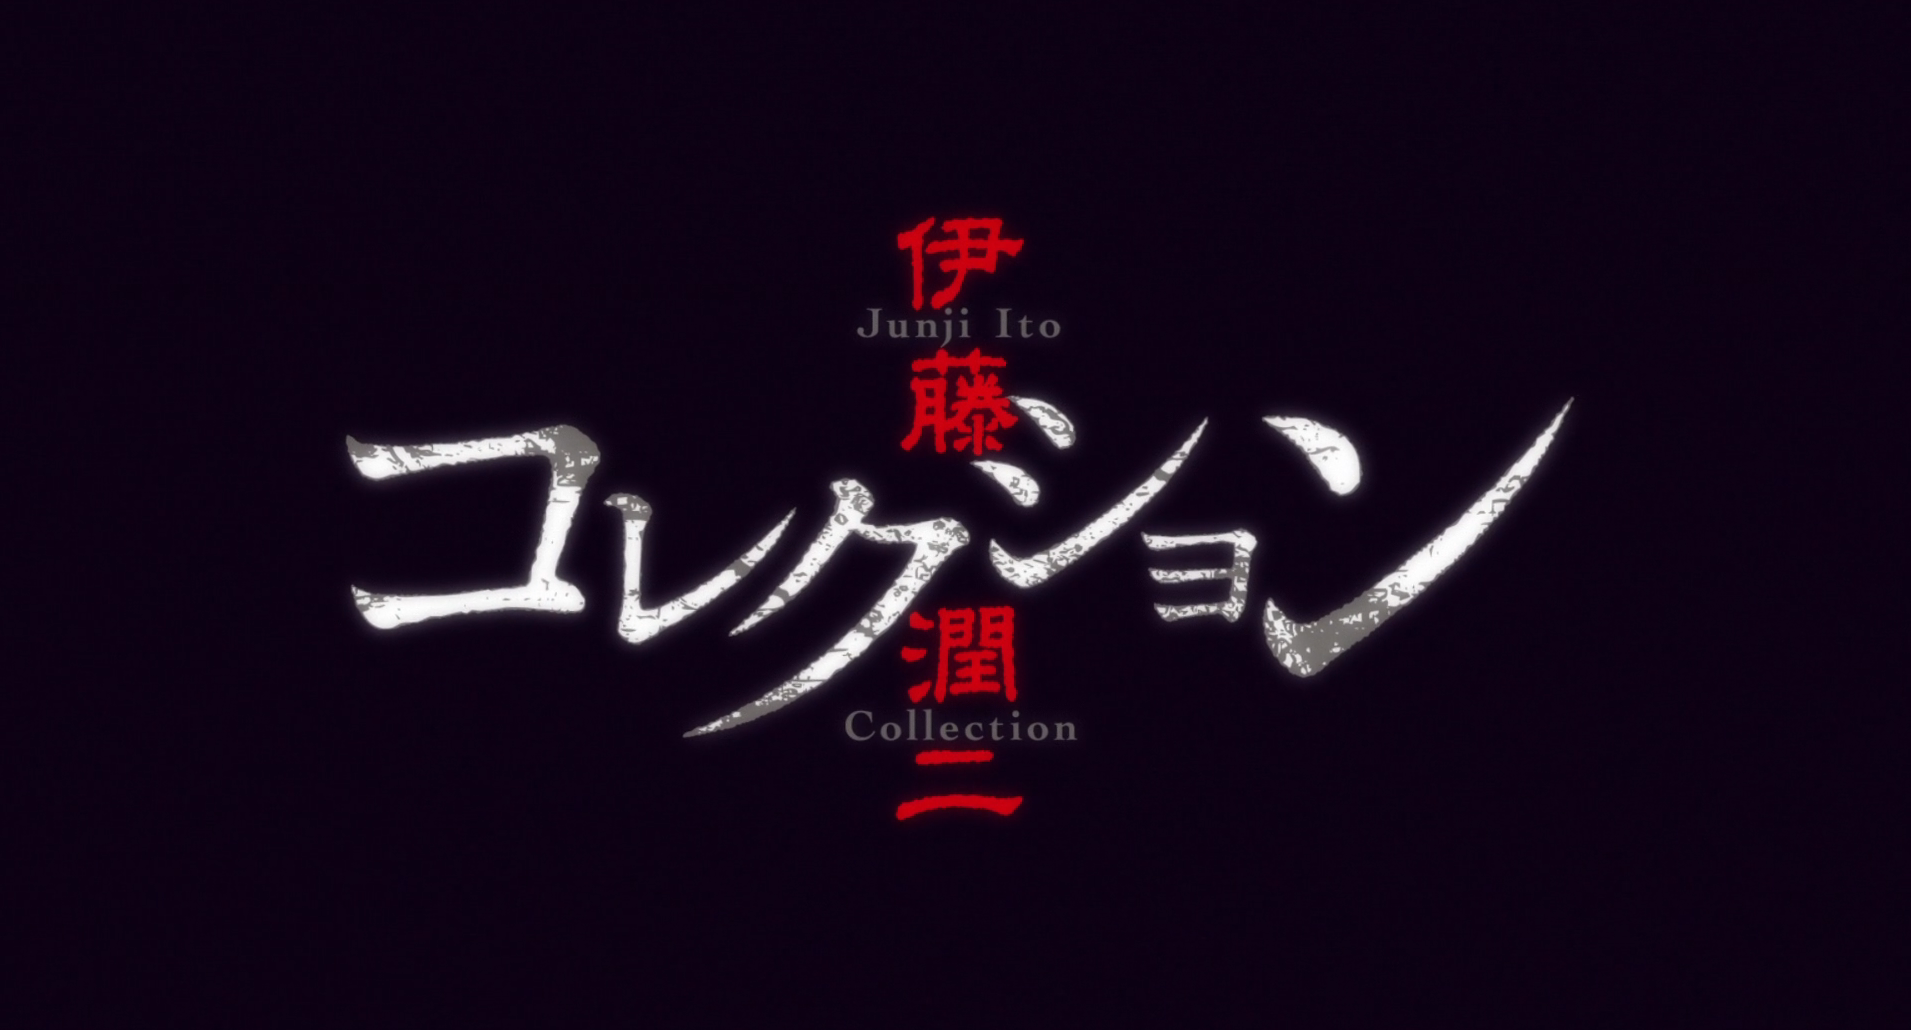 Junji Ito Collection Title